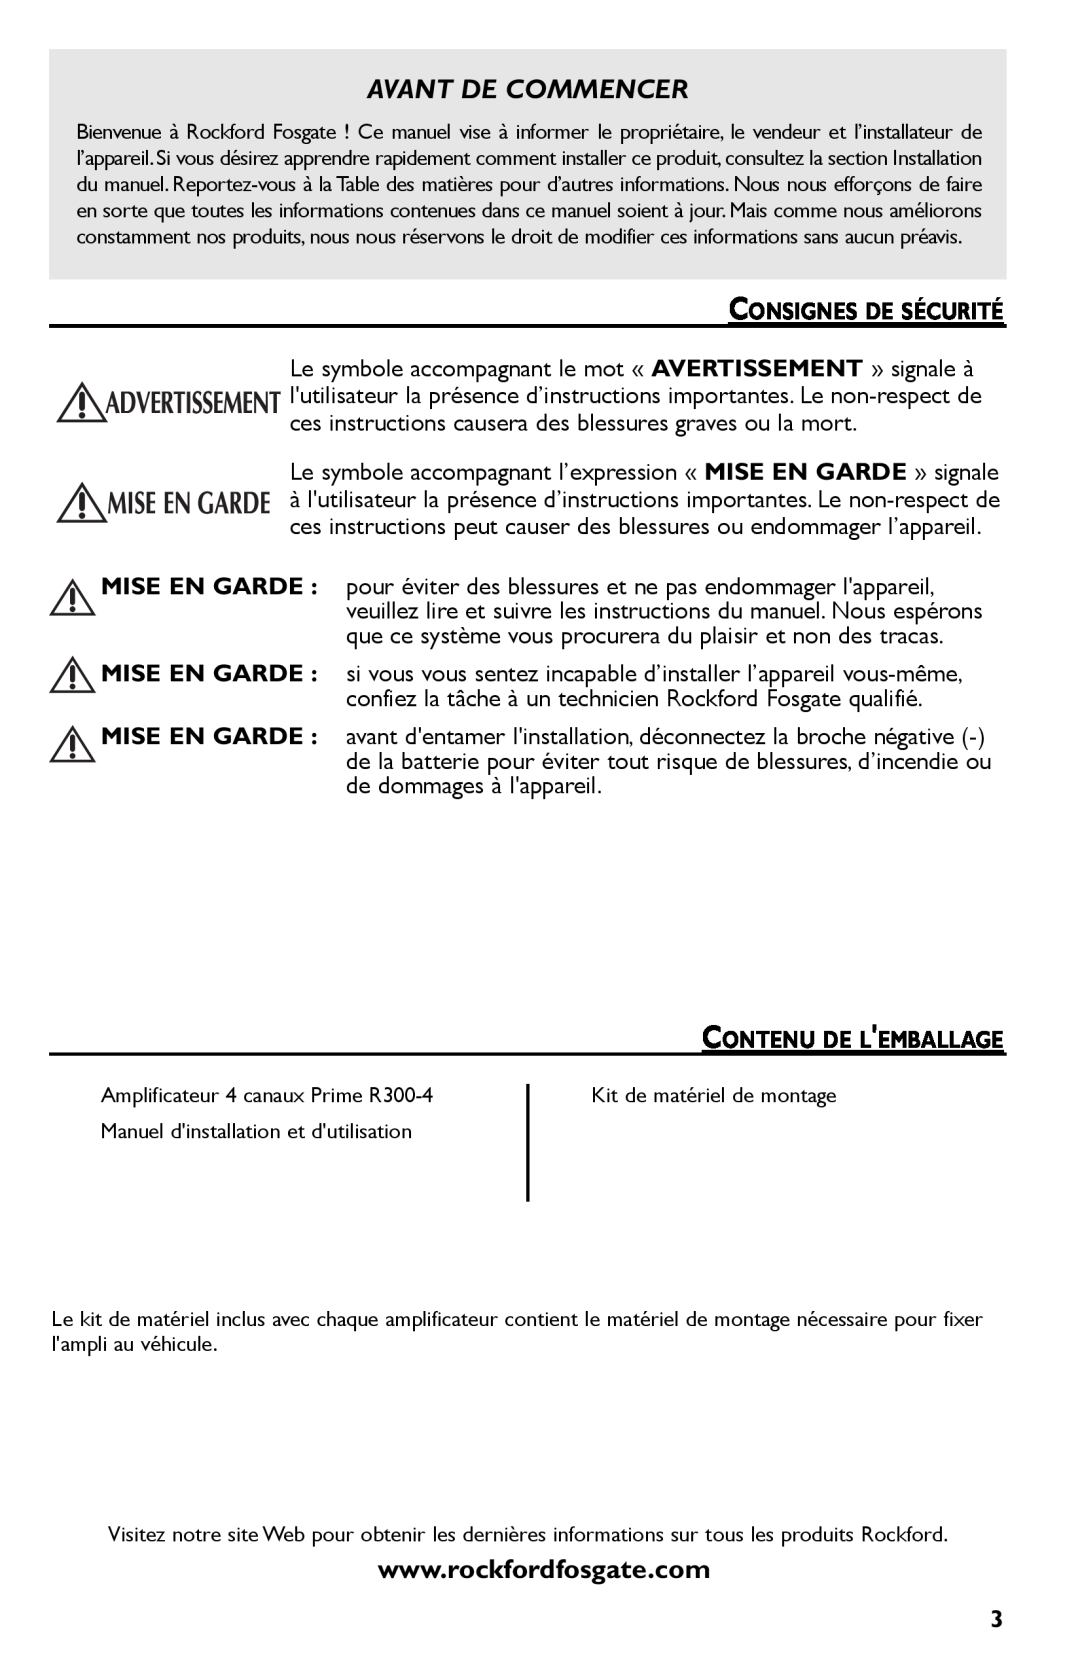 Rockford Fosgate R300-4 manual Avant De Commencer, Consignes De Sécurité, Contenu De Lemballage 